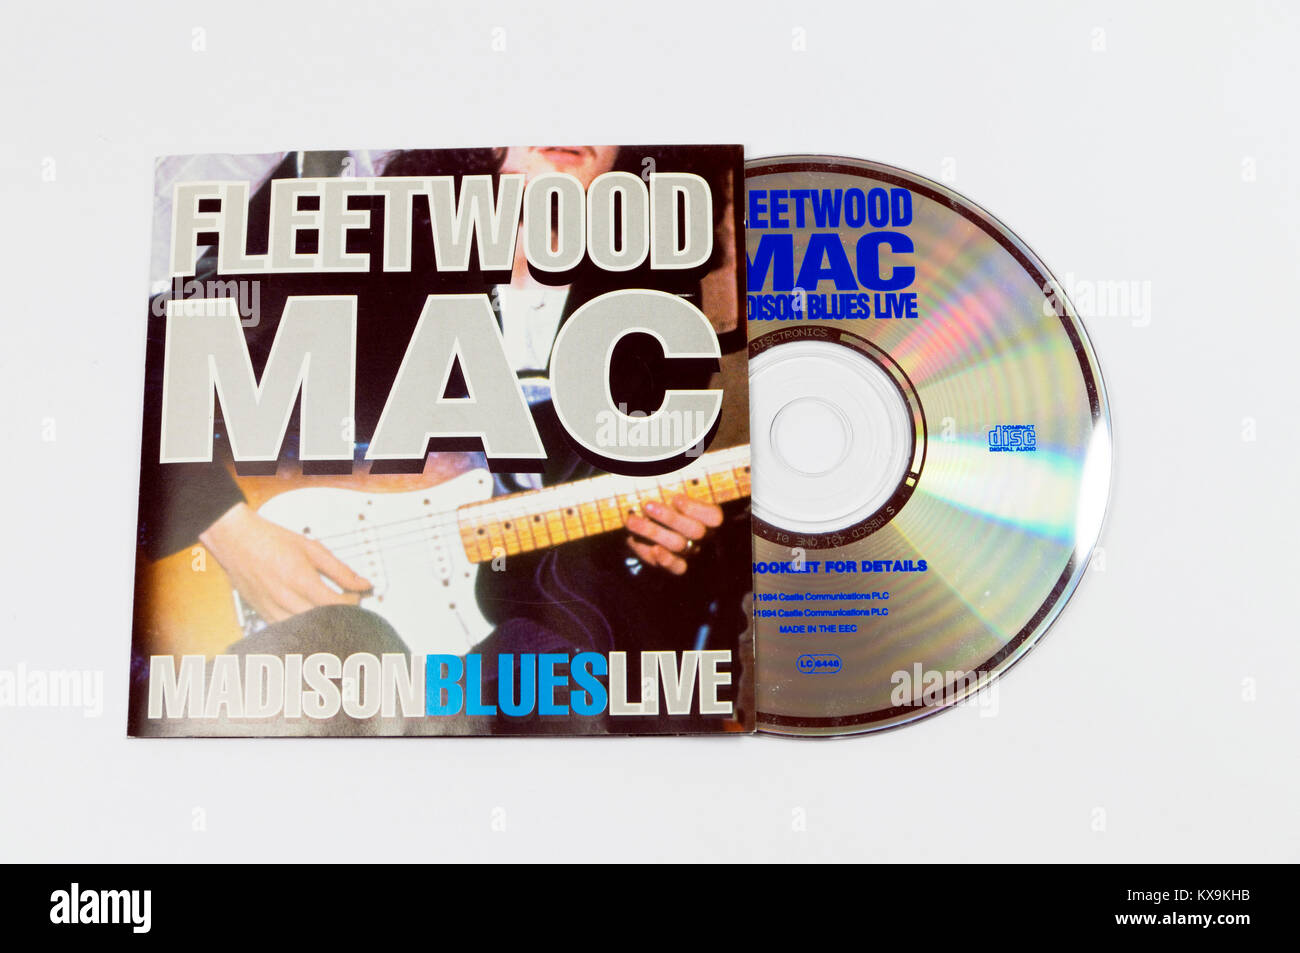 Fleetwood Mac, Madison Blues Live album. Stock Photo